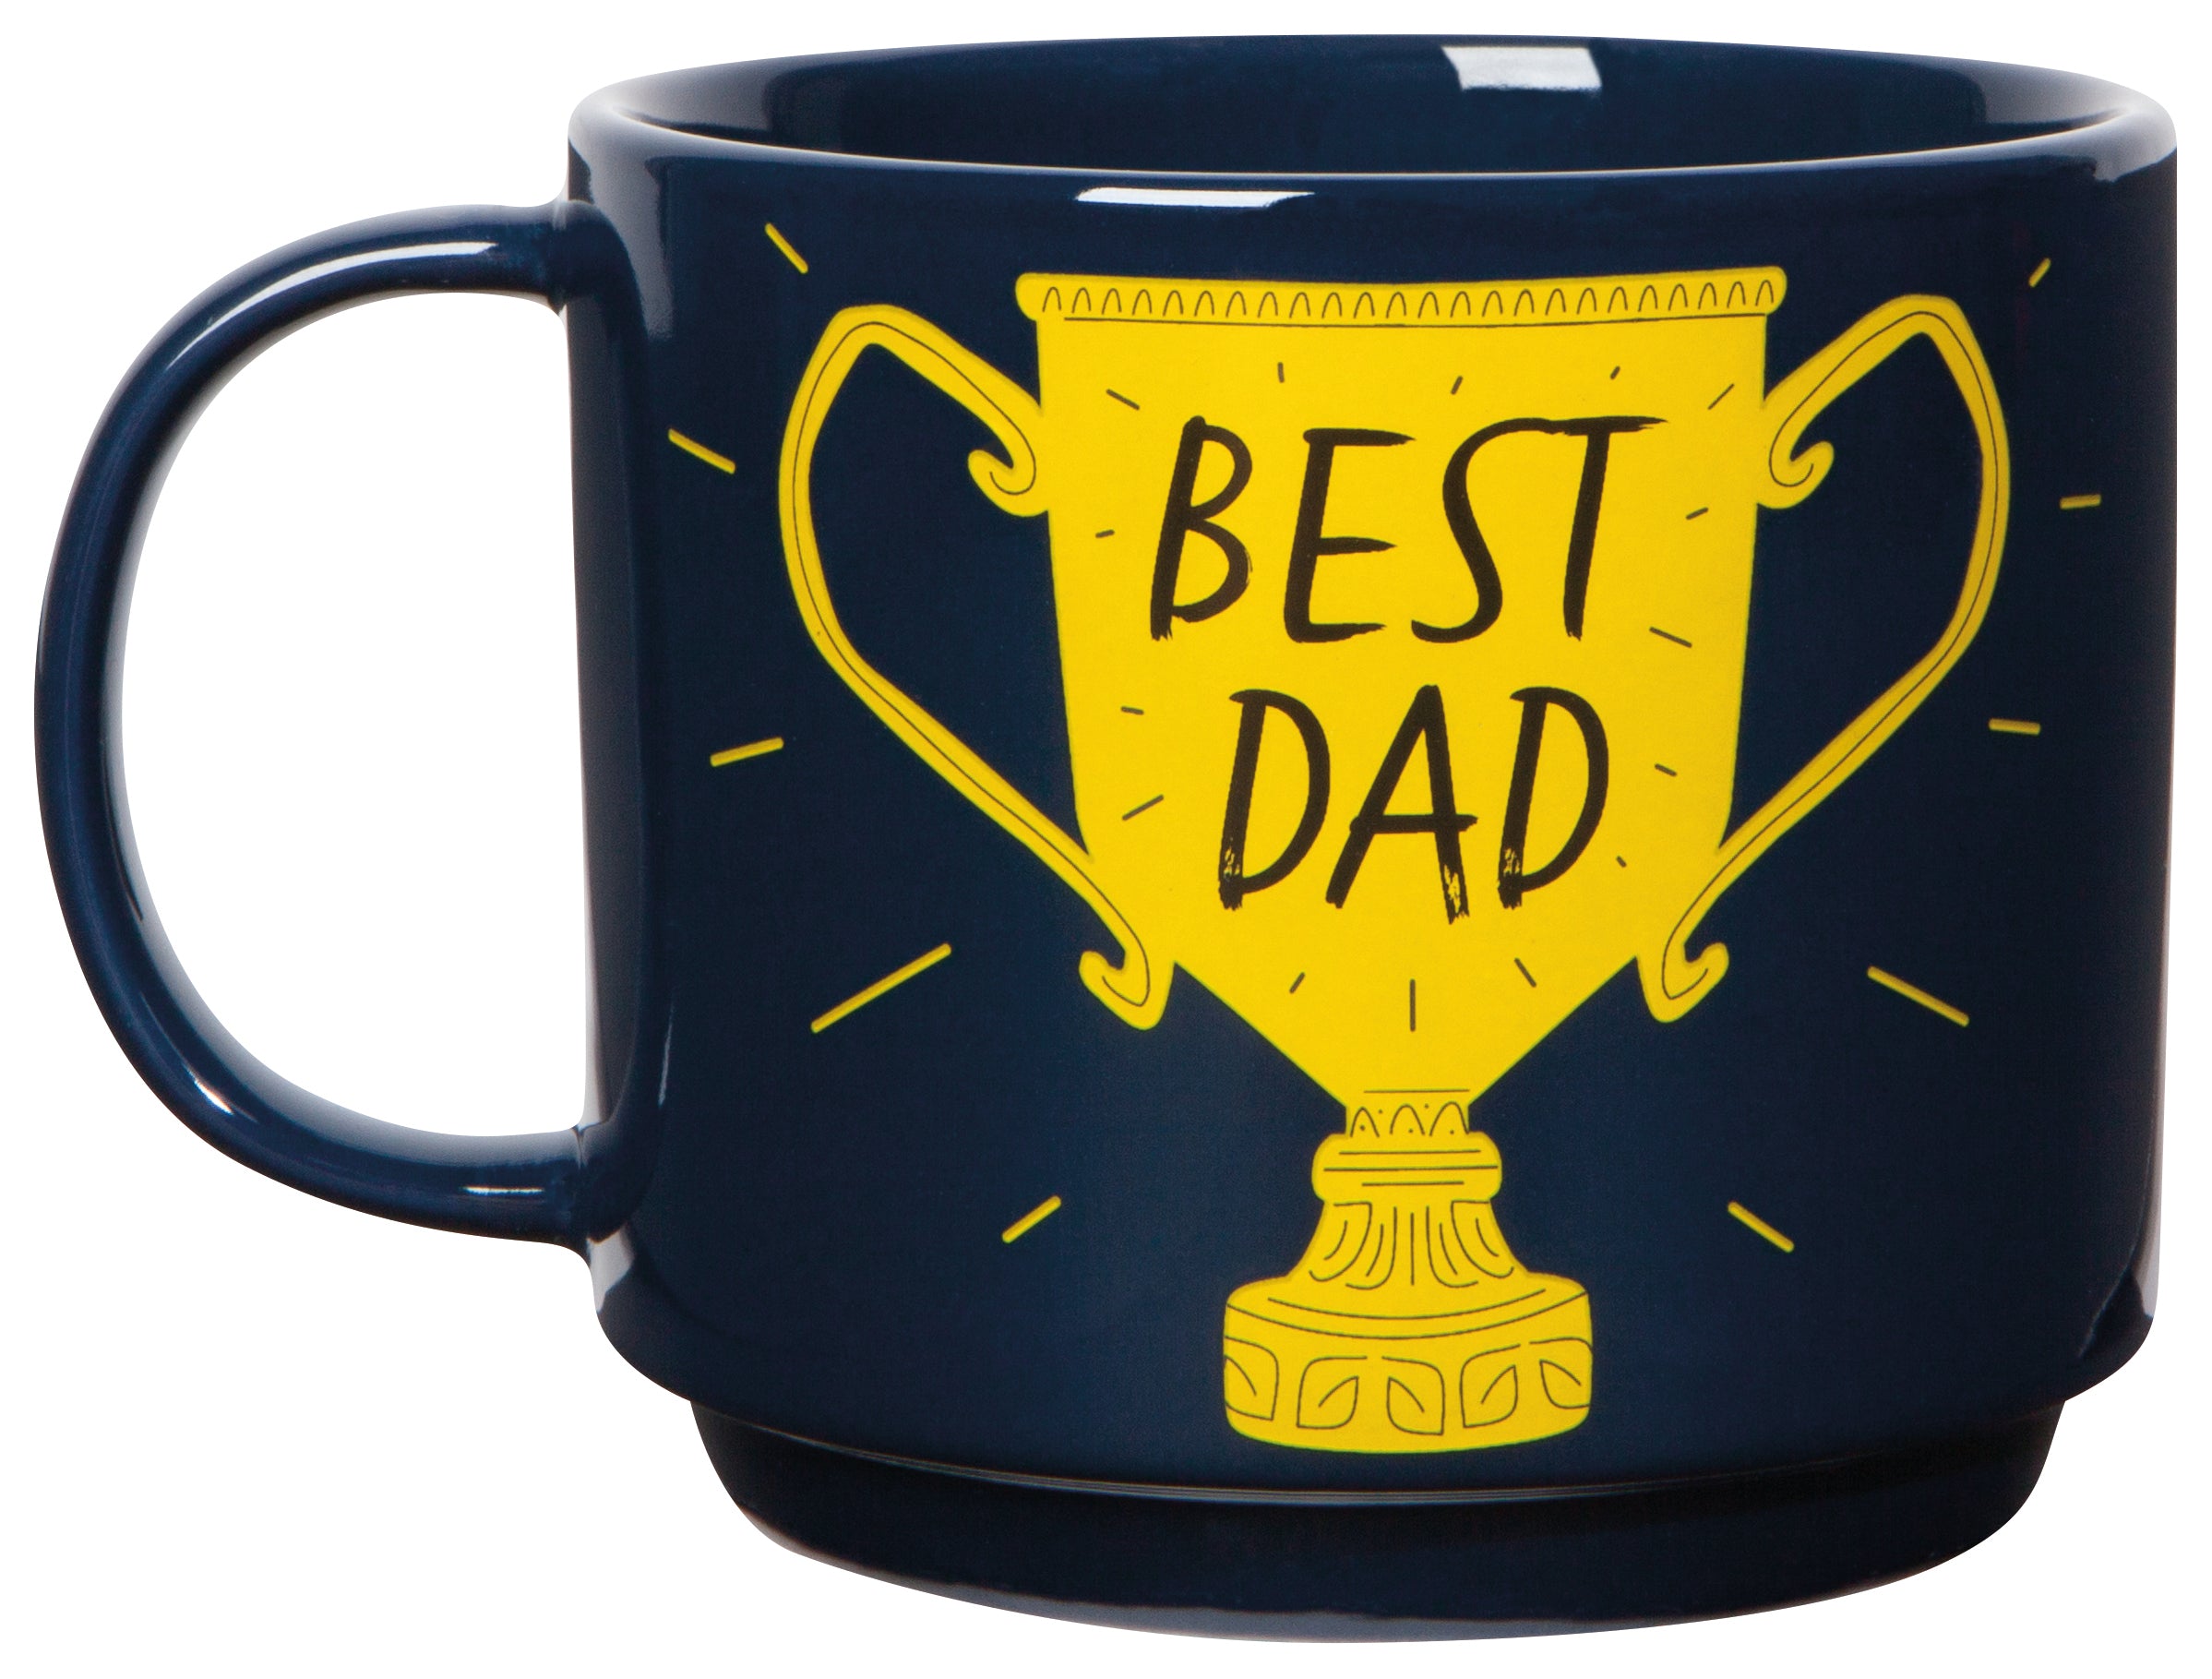 Best Dad Mug & Socks, Set of 2